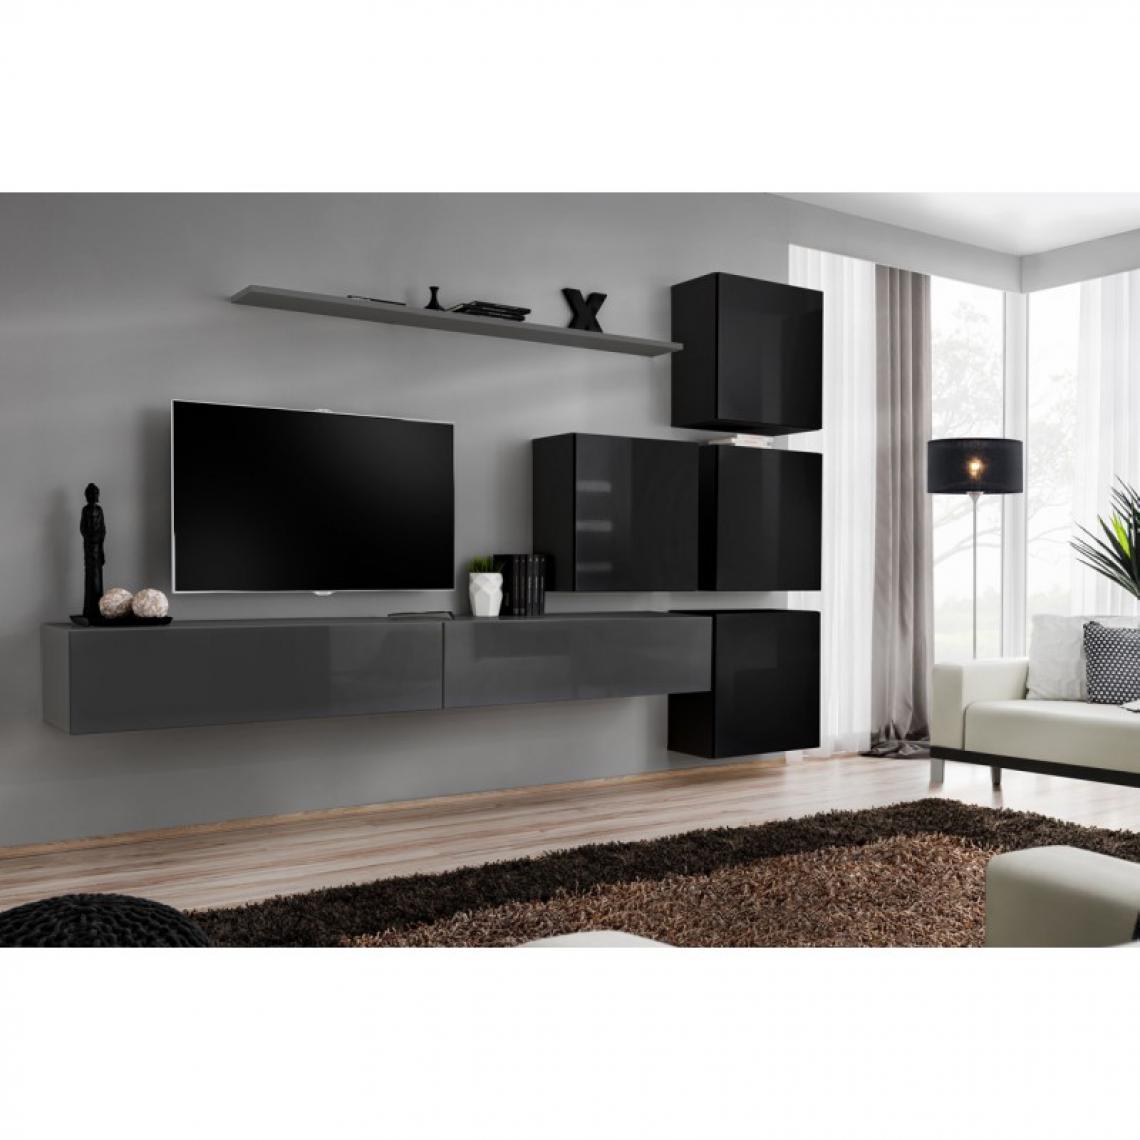 Ac-Deco - Meuble TV Mural Design Switch IX 310cm Gris & Noir - Meubles TV, Hi-Fi